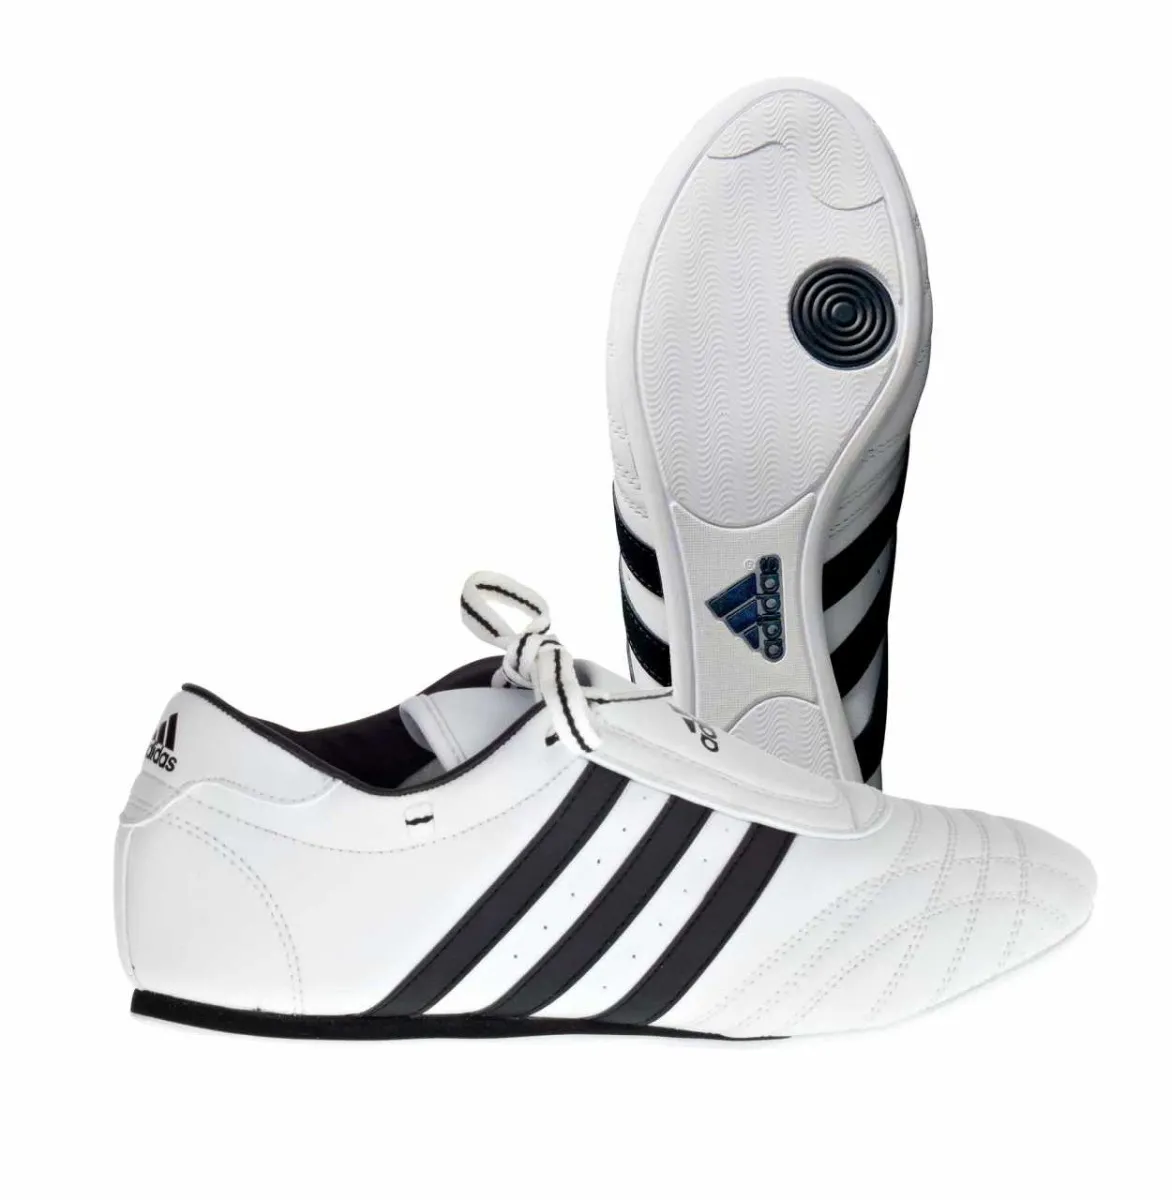 Adidas sneaker shoes SM II white